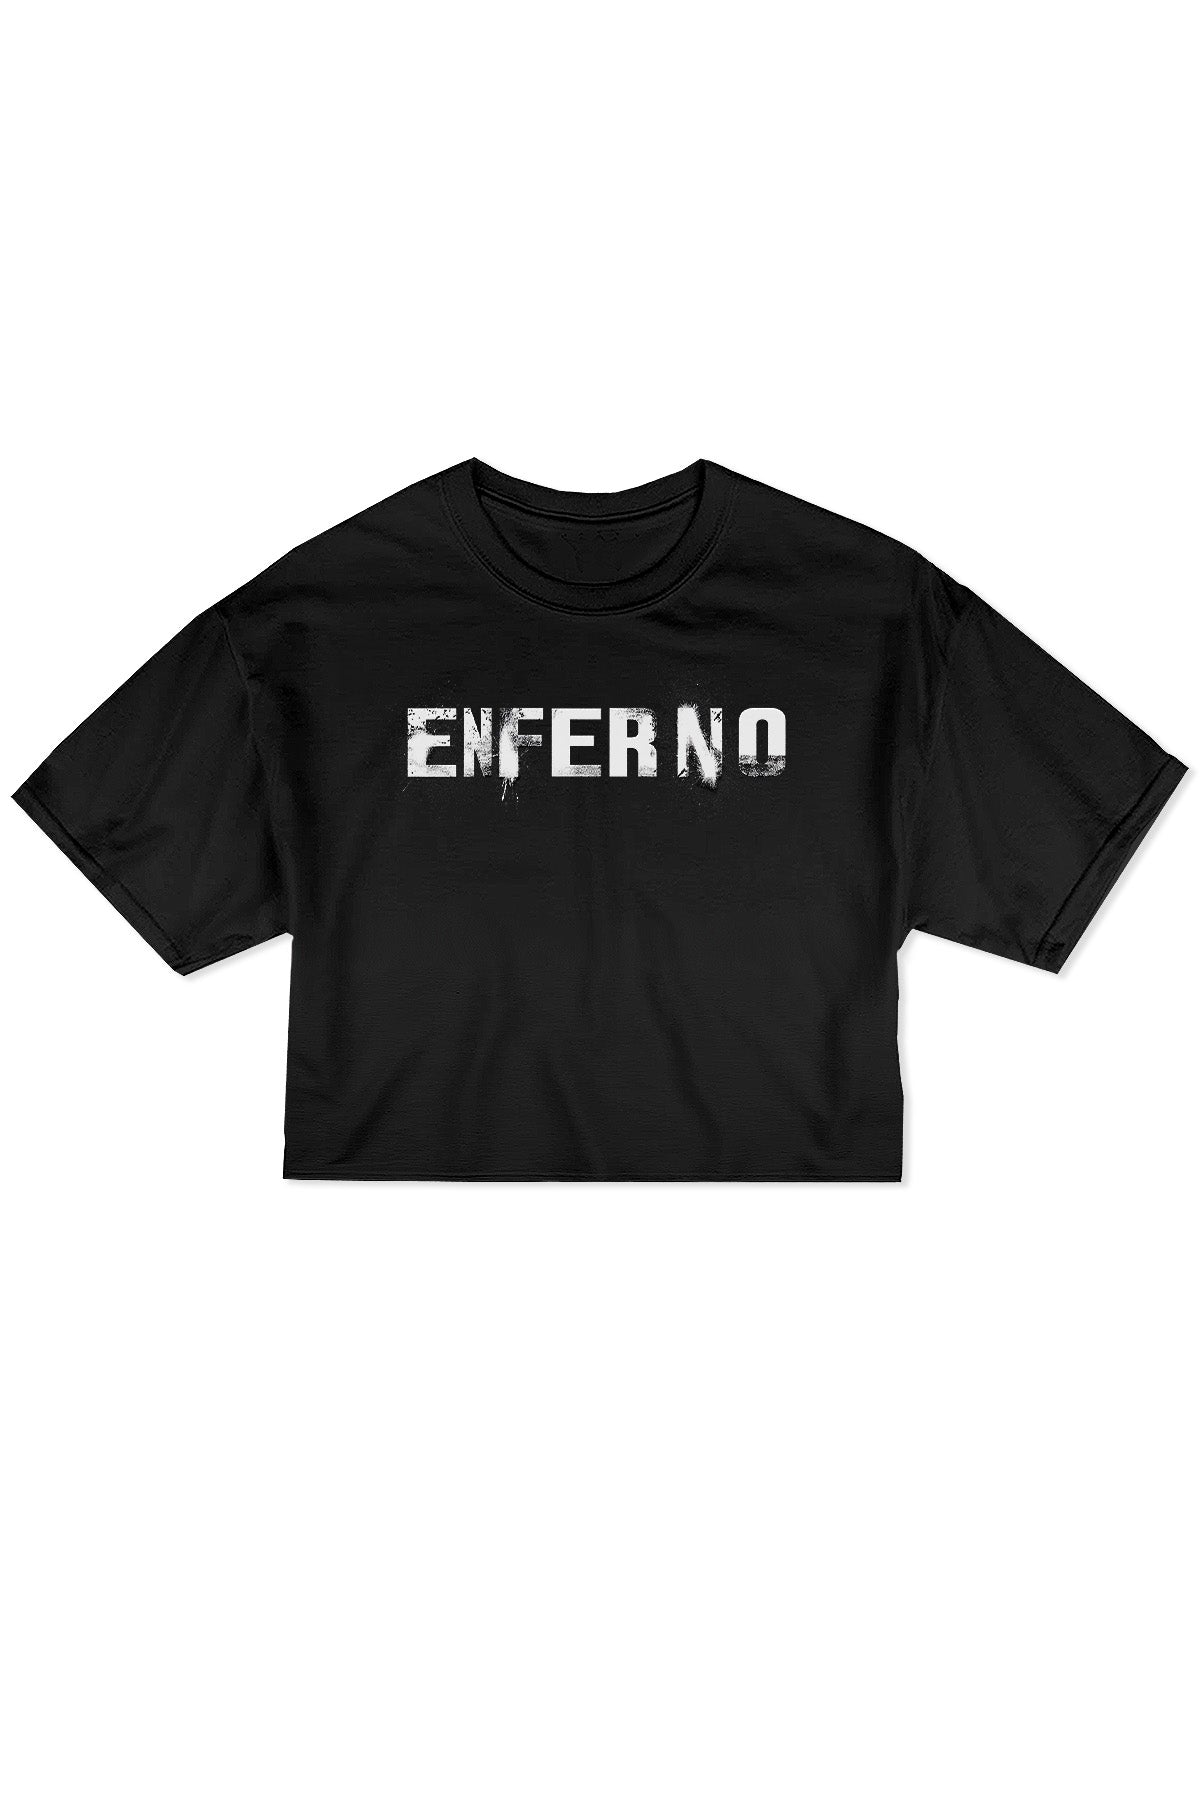 Enferno Fight Logo Crop Tee in Black.